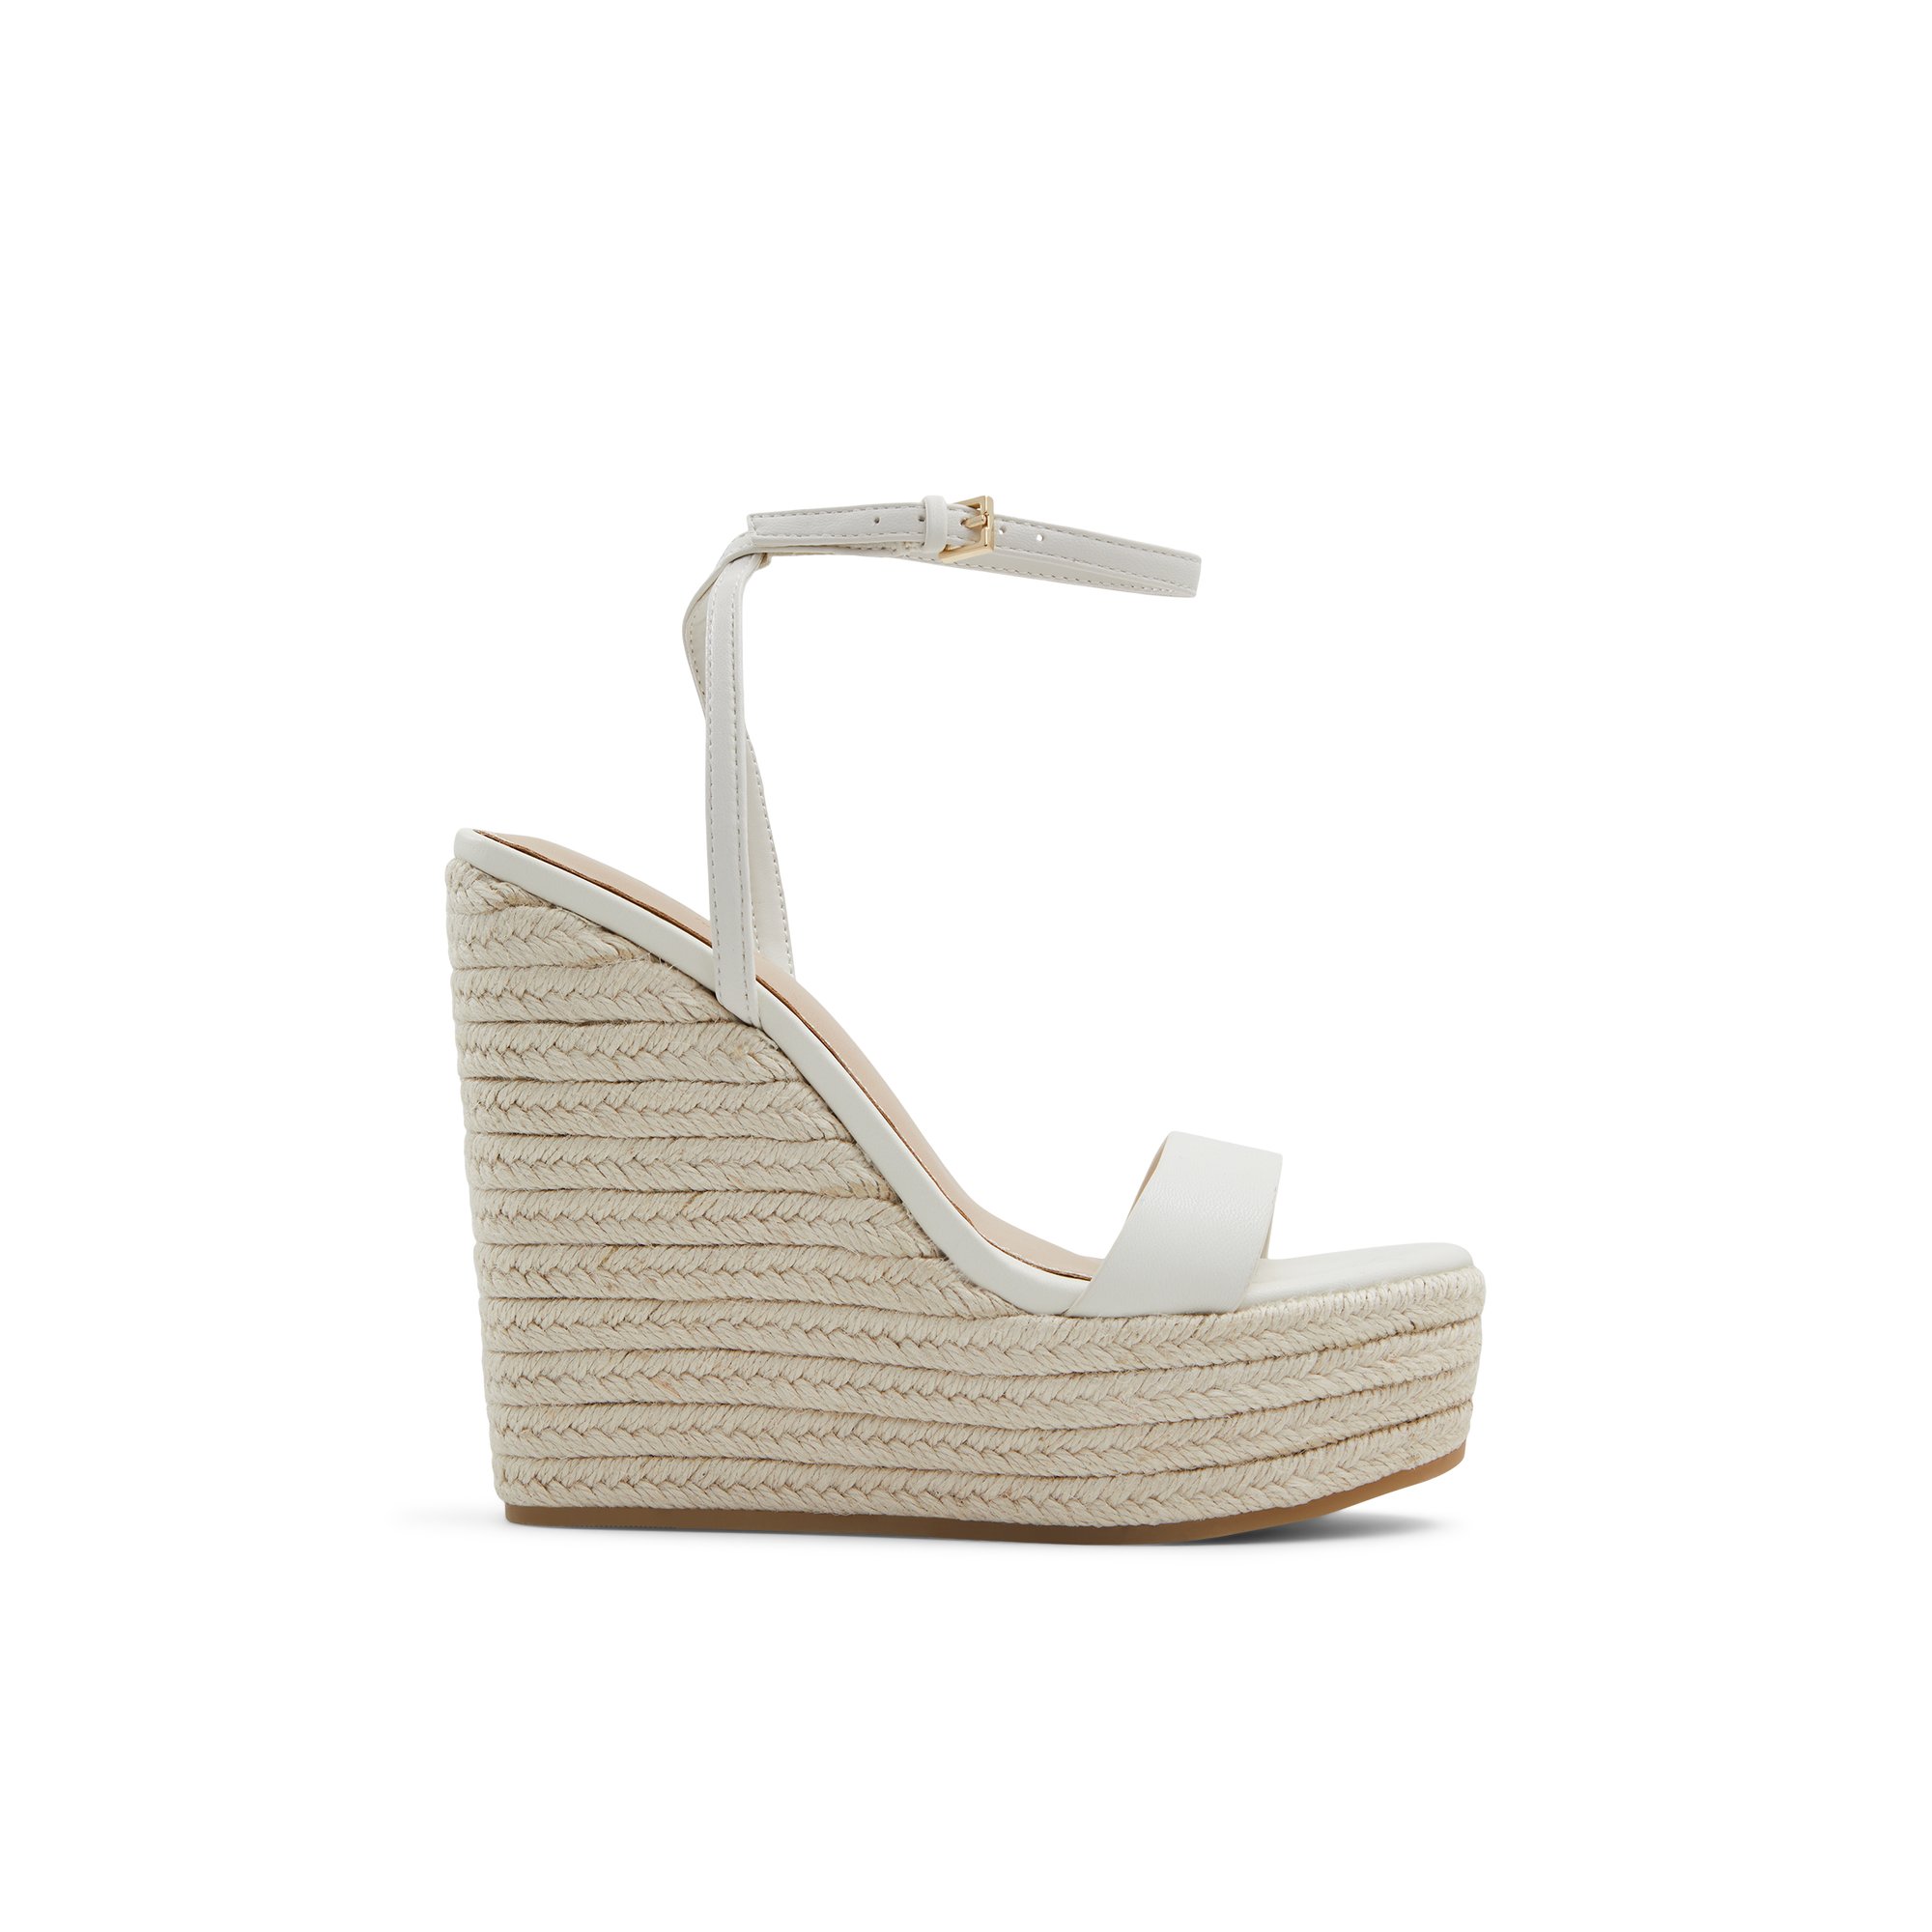 ALDO Marysol - Women's Wedge Sandals - White